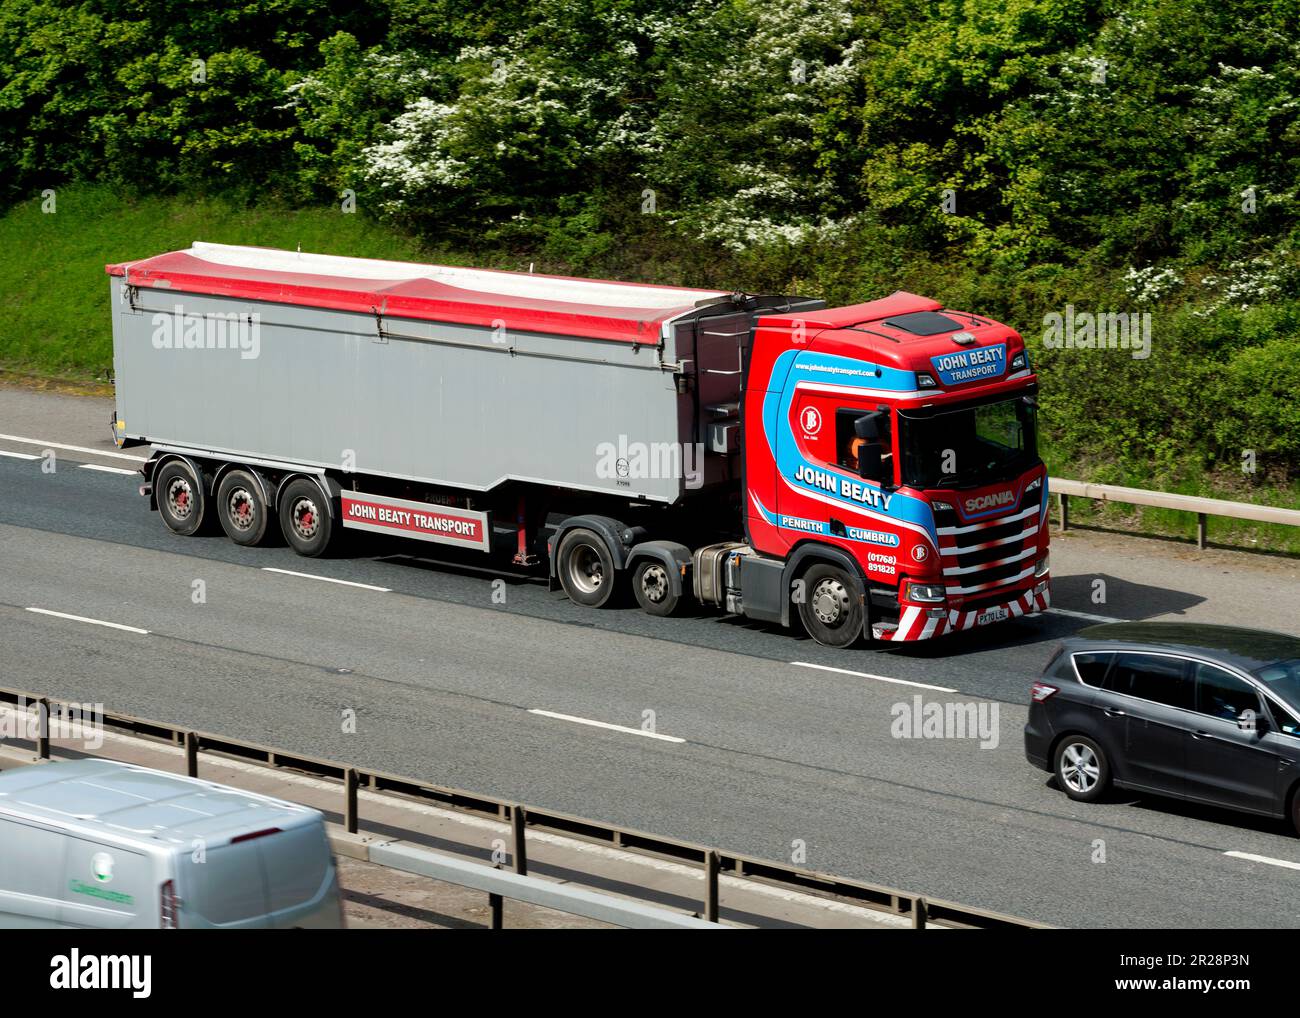 John Beaty lorry on the M40 motorway, Warwickshire, UK Stock Photo